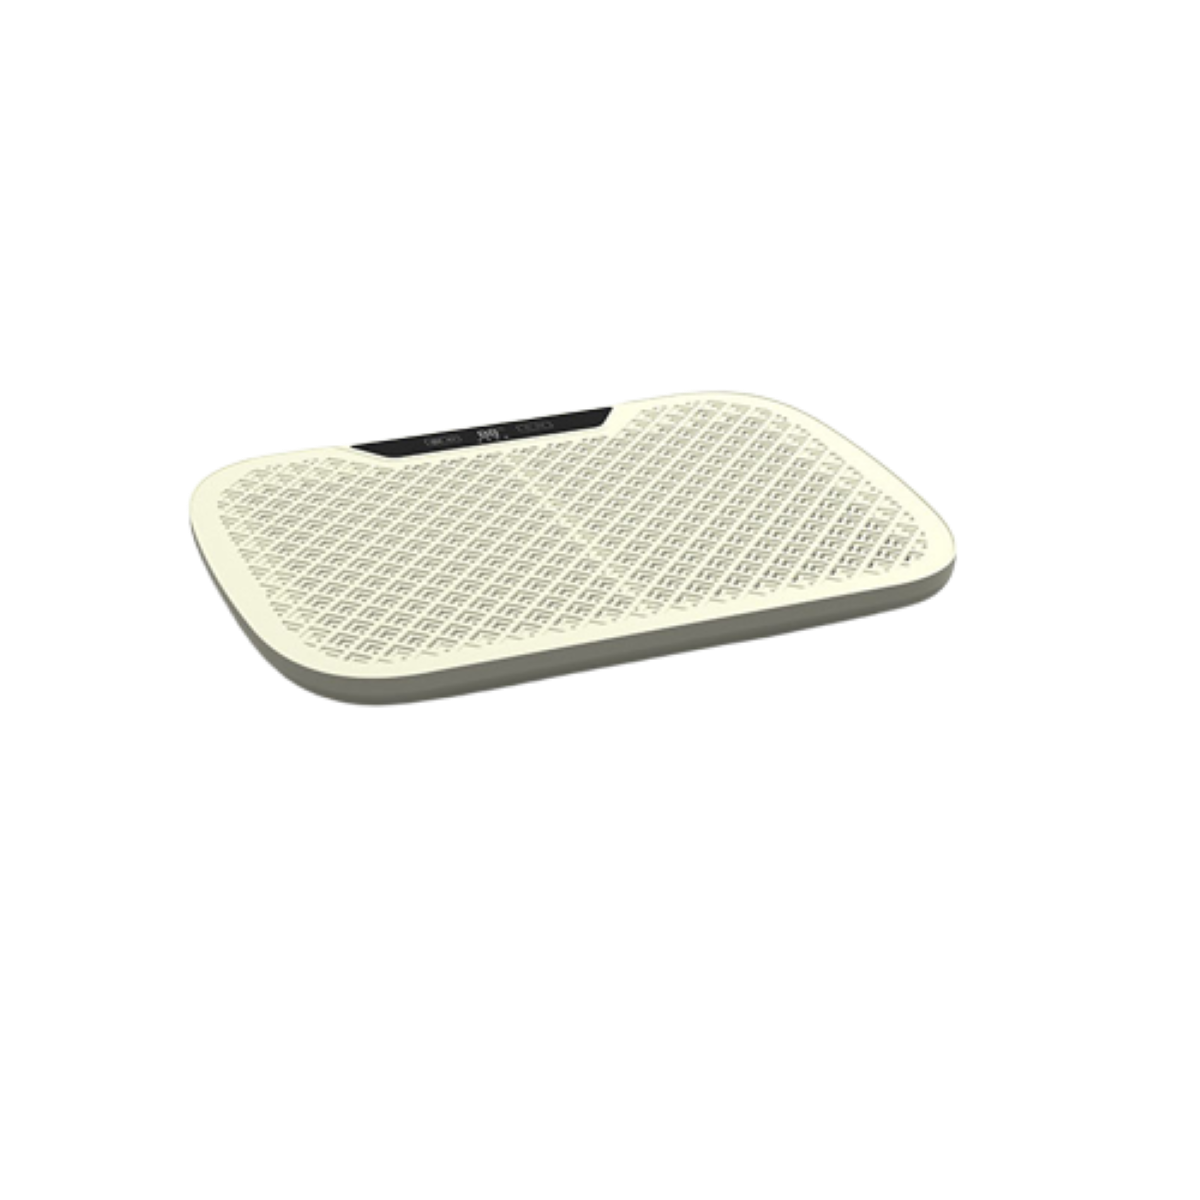 LACAMAX Standard - vierstufige niedriger Foot Temperaturregelung Energieverbrauch, Warmer Fußwärmer Graphene